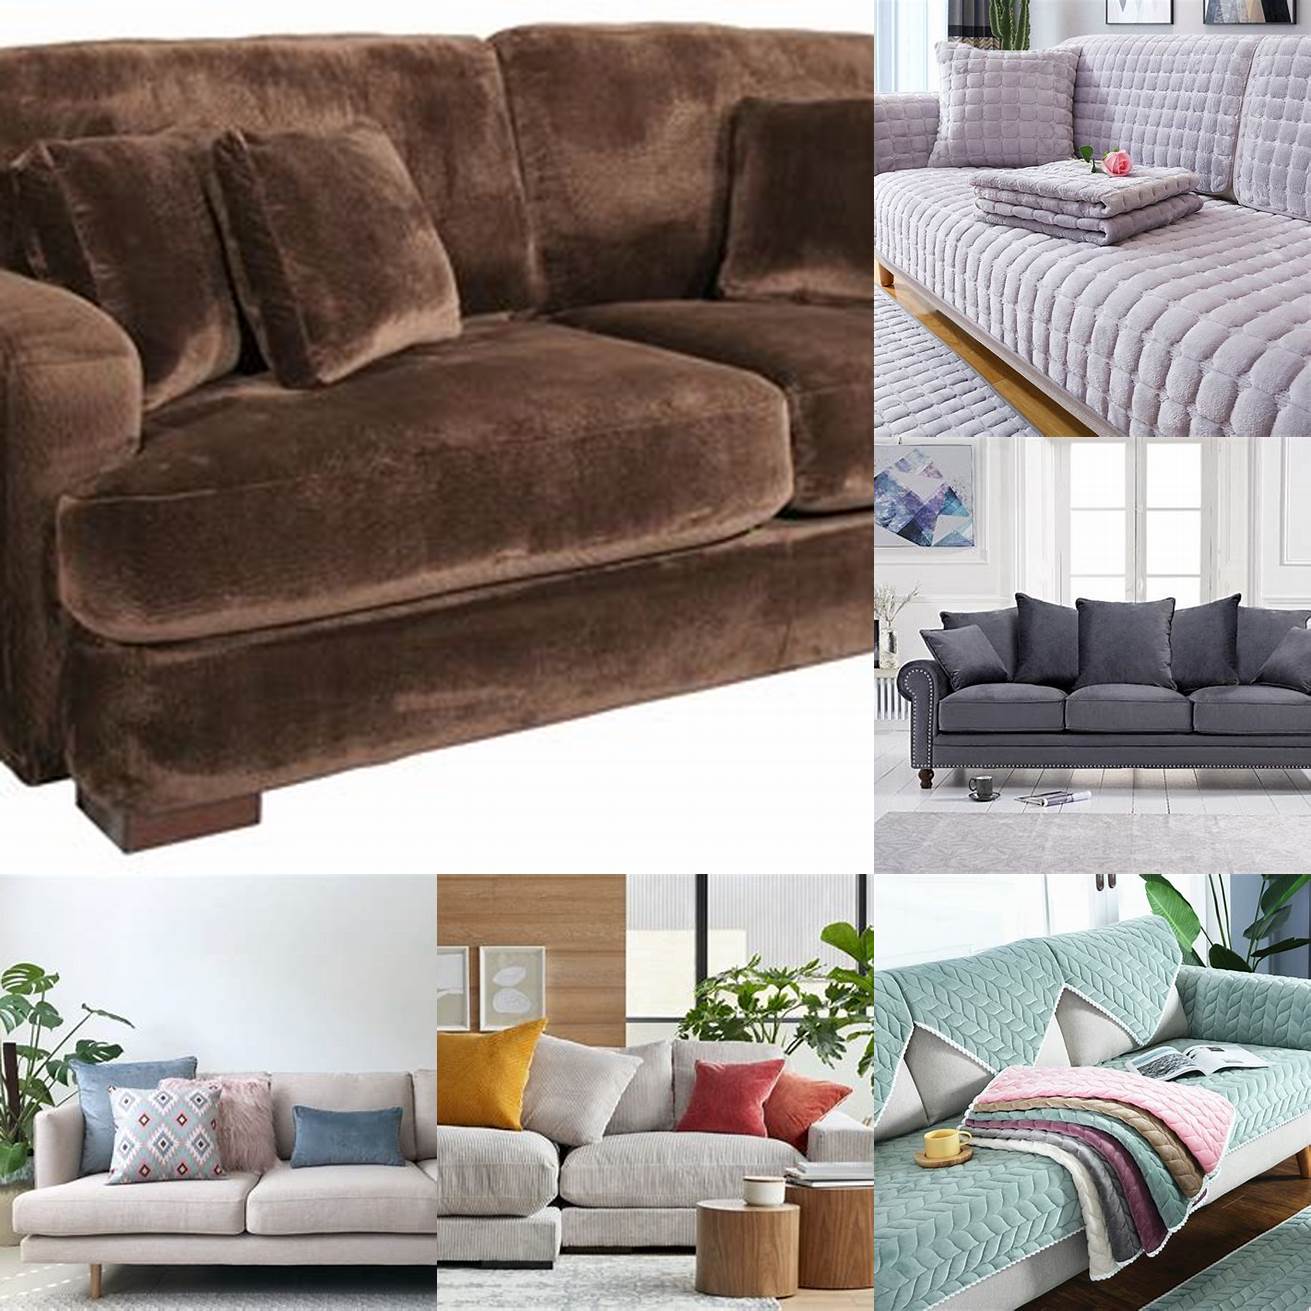 Image of the sofas plush cushions